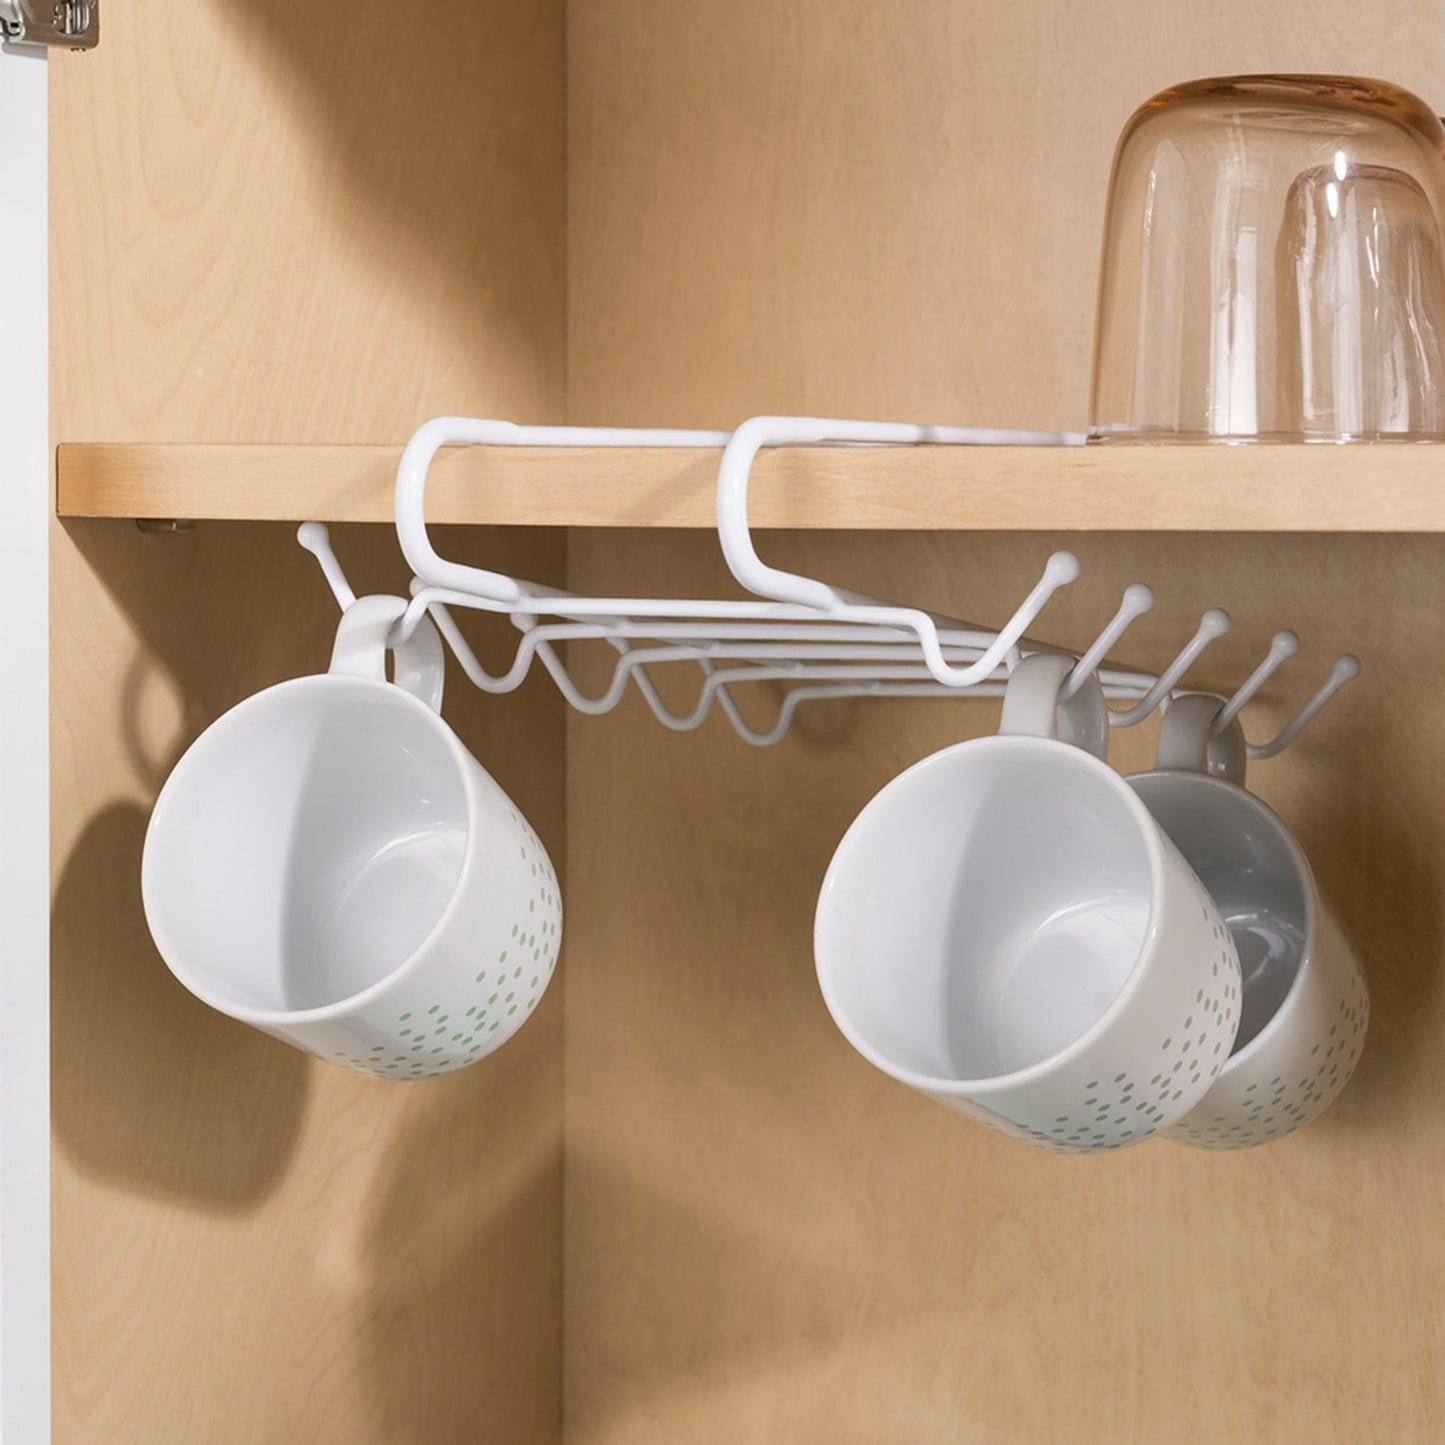 Under-the-Shelf Mug Rack